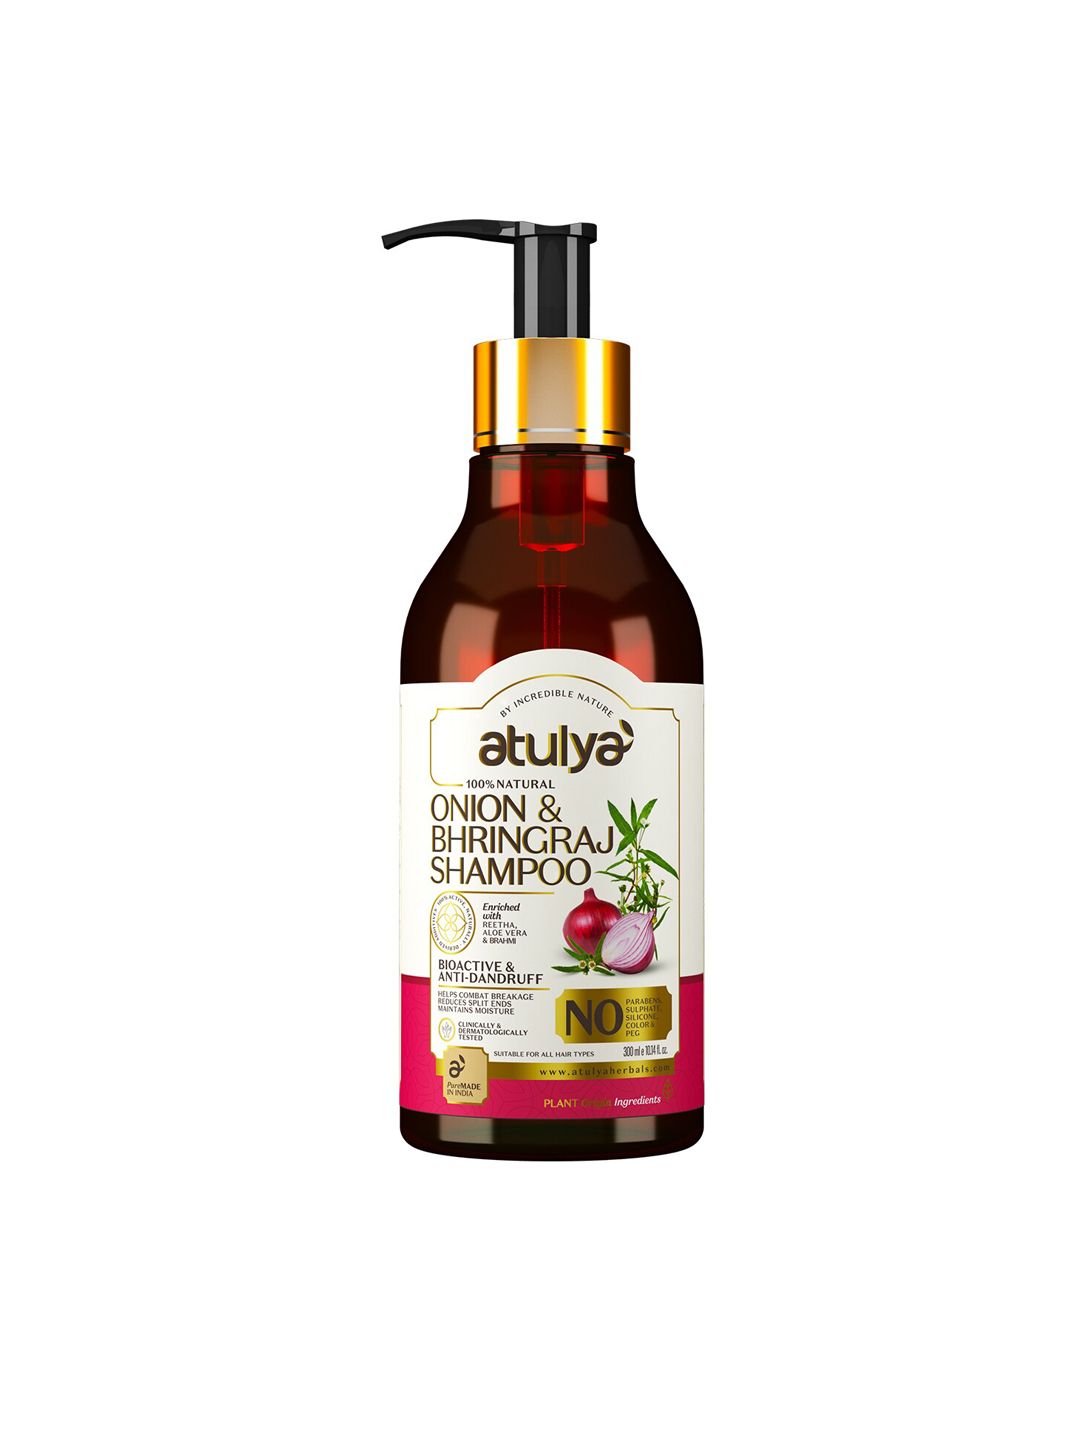 Atulya Onion & Bhringraj Hair Shampoo - Bioactive & Anti-Dandruff - 300 ml Price in India